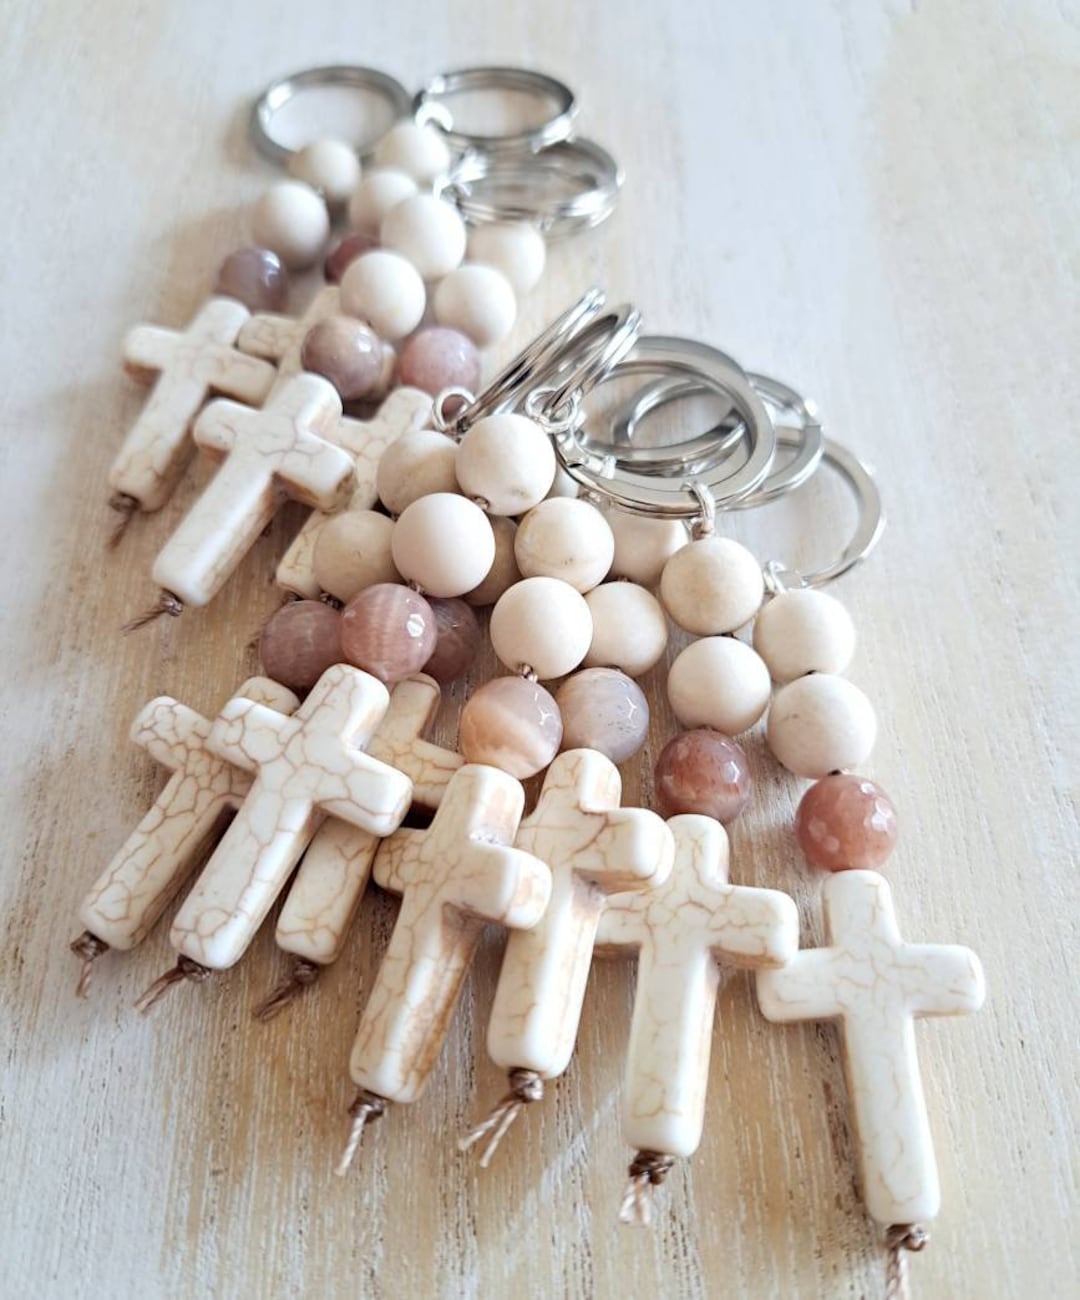 Mini Rosary Beads, Catholic Gift Ideas, Religious Gift for Men